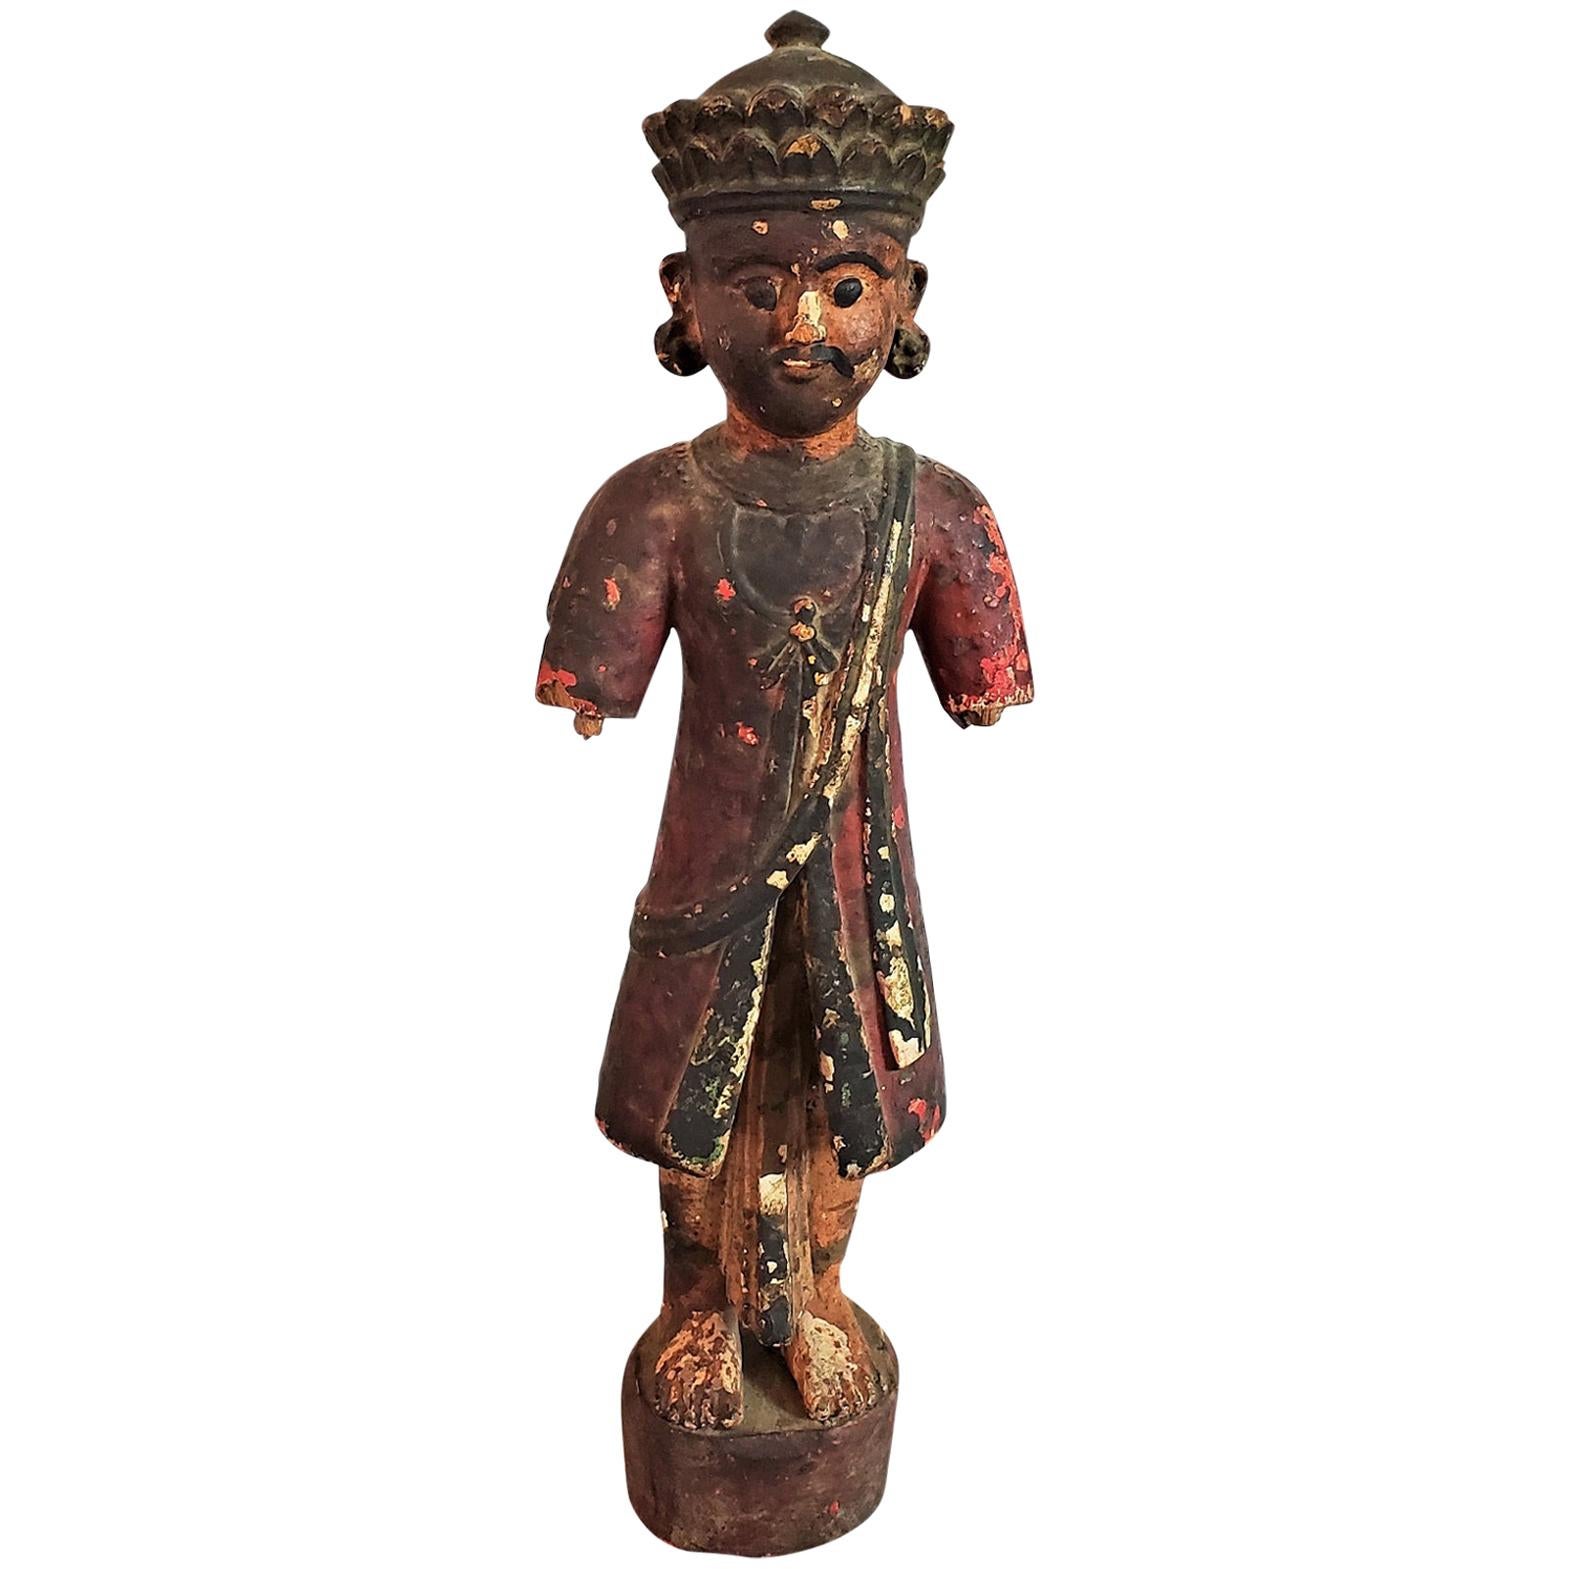 Figurine masculine polychrome cambodgienne du début du 20e siècle